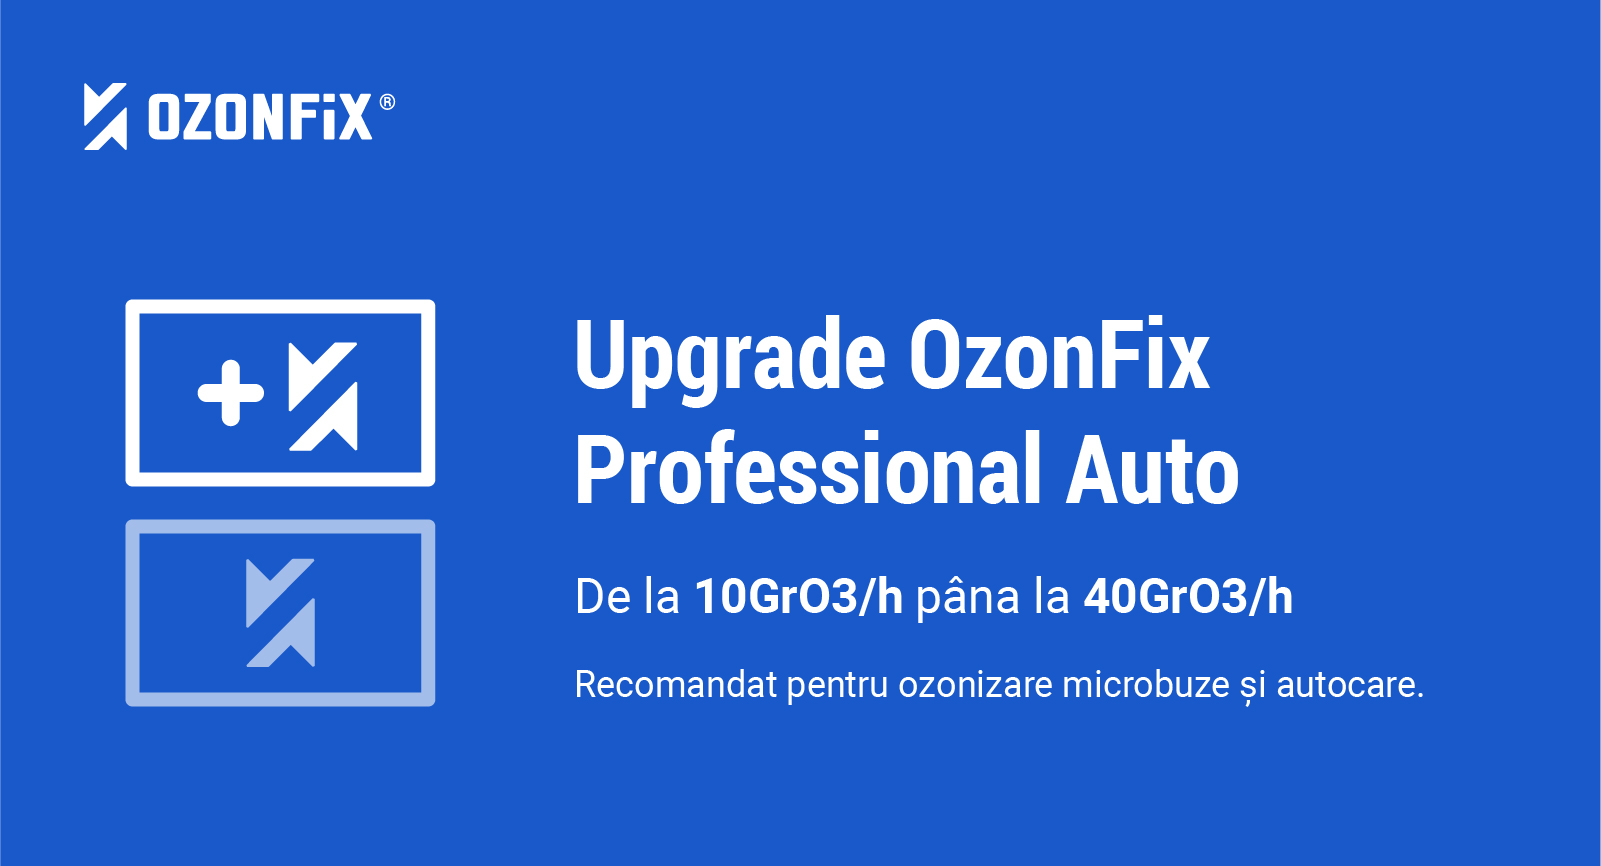 Upgrade 2 OzonFix Professional Auto